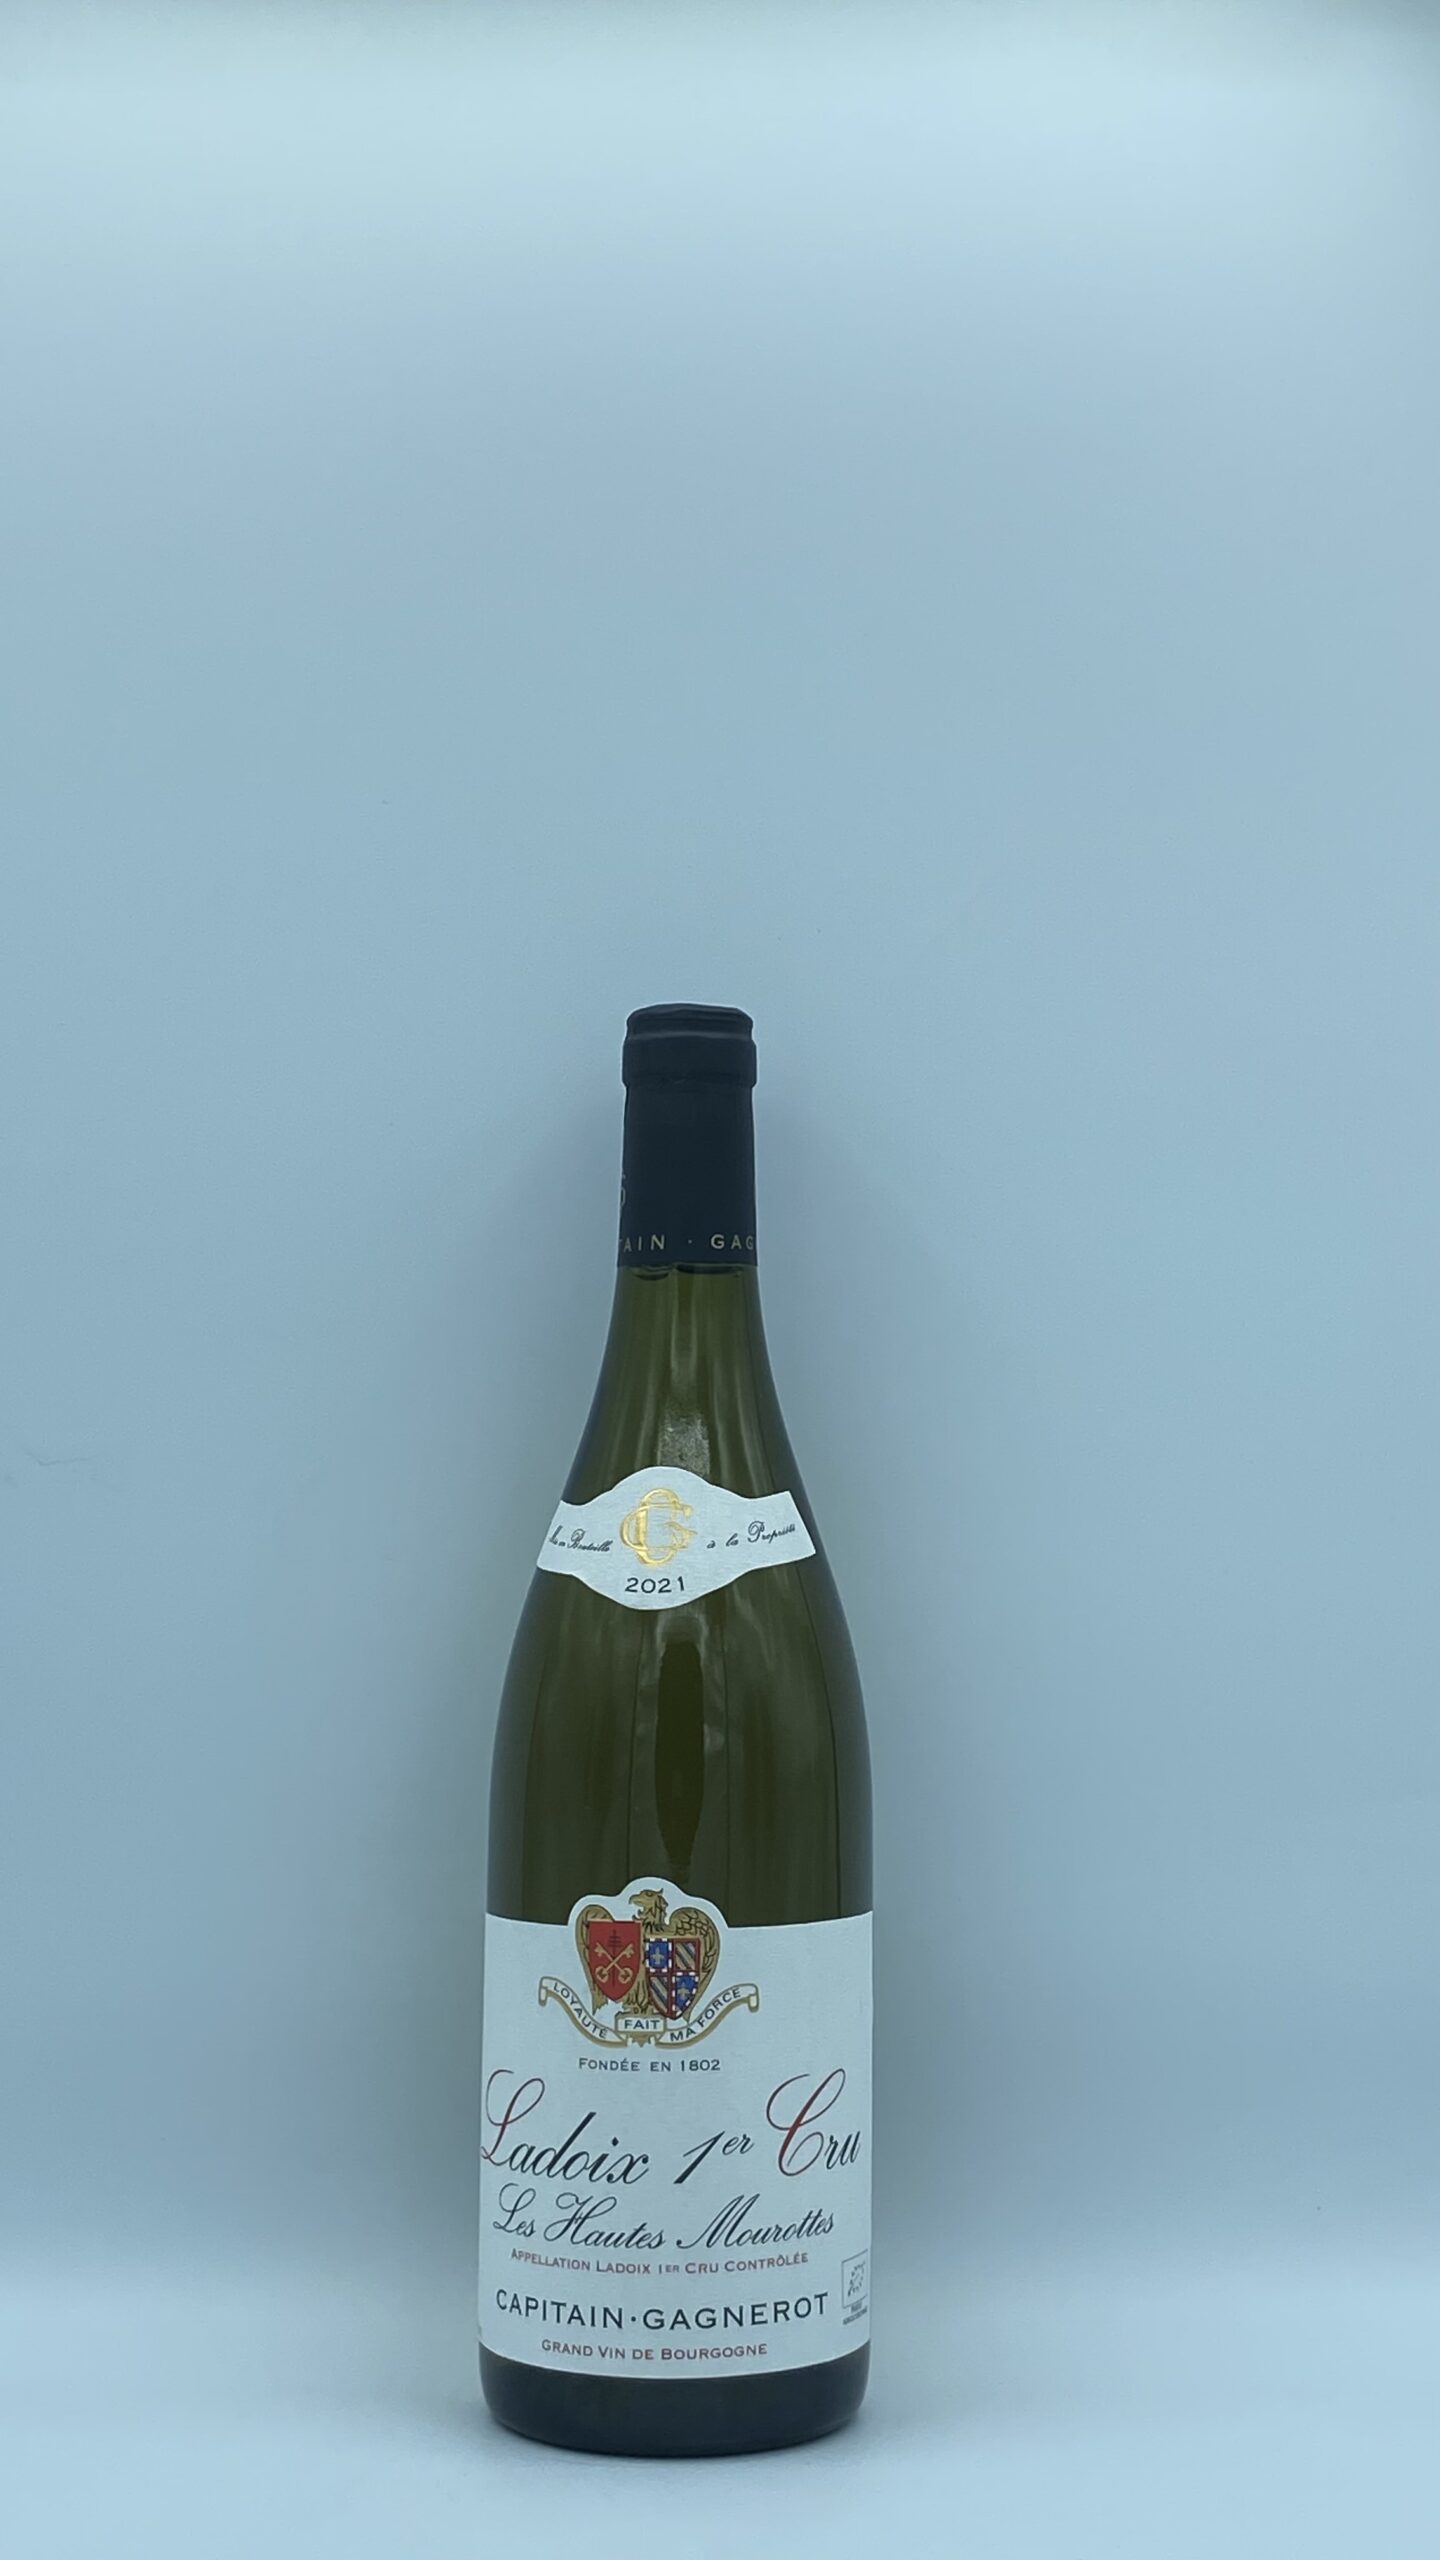 Bourgogne Ladoix 1er Cru “Hautes Mourottes” 2021 Domaine Capitain